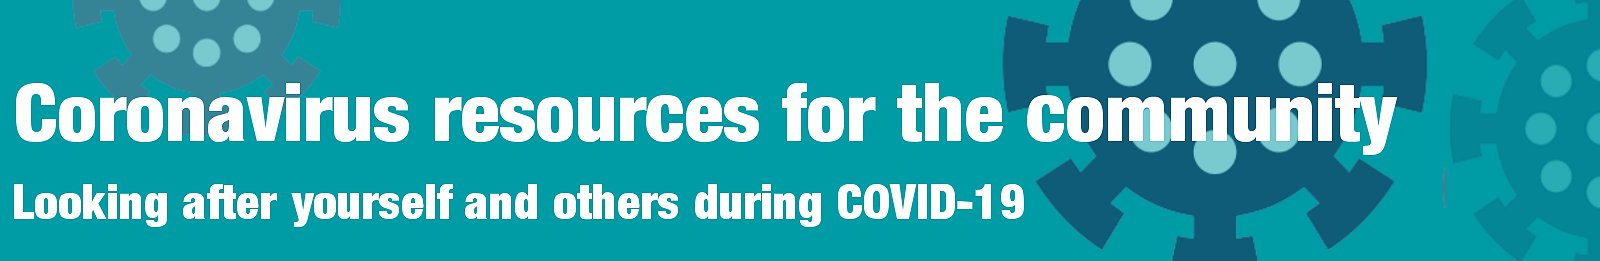 Coronavirus resources for the community